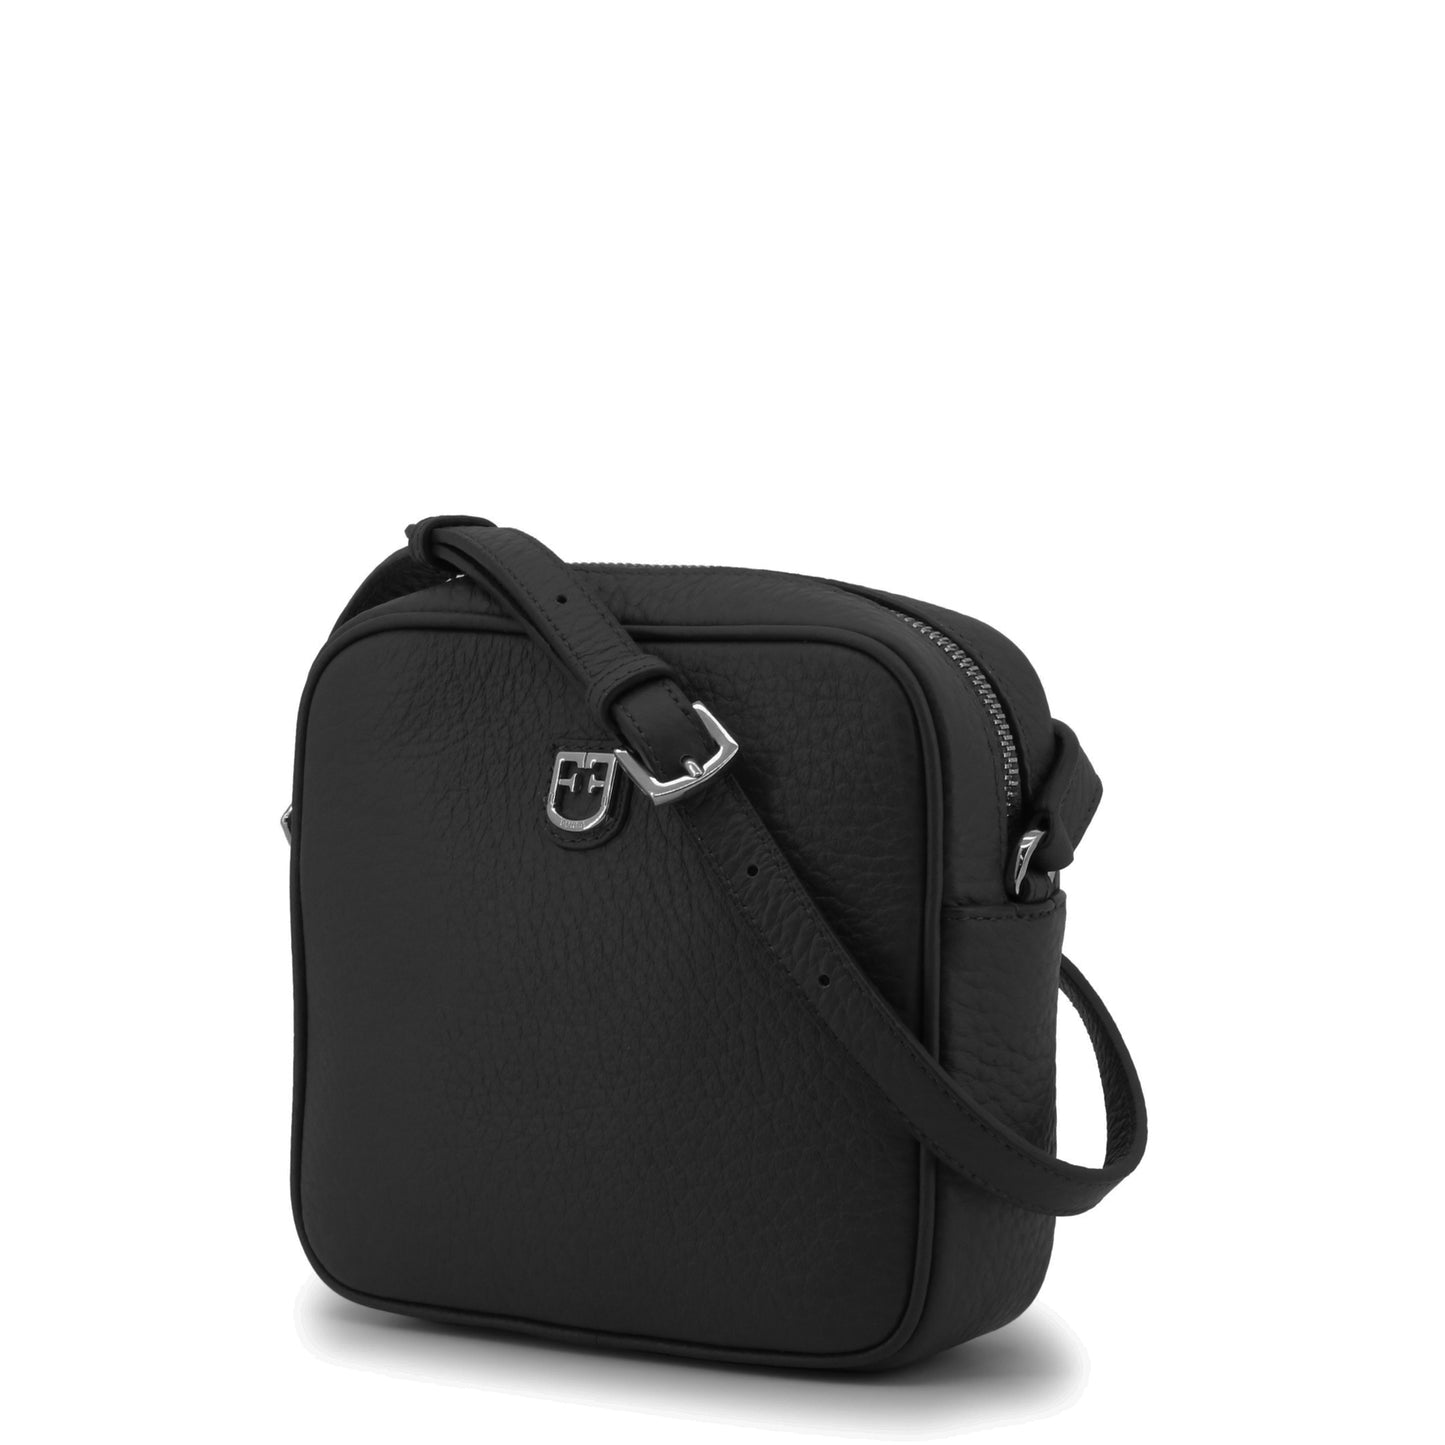 Furla Adjustable Leather Across-Body Bag 'Black'